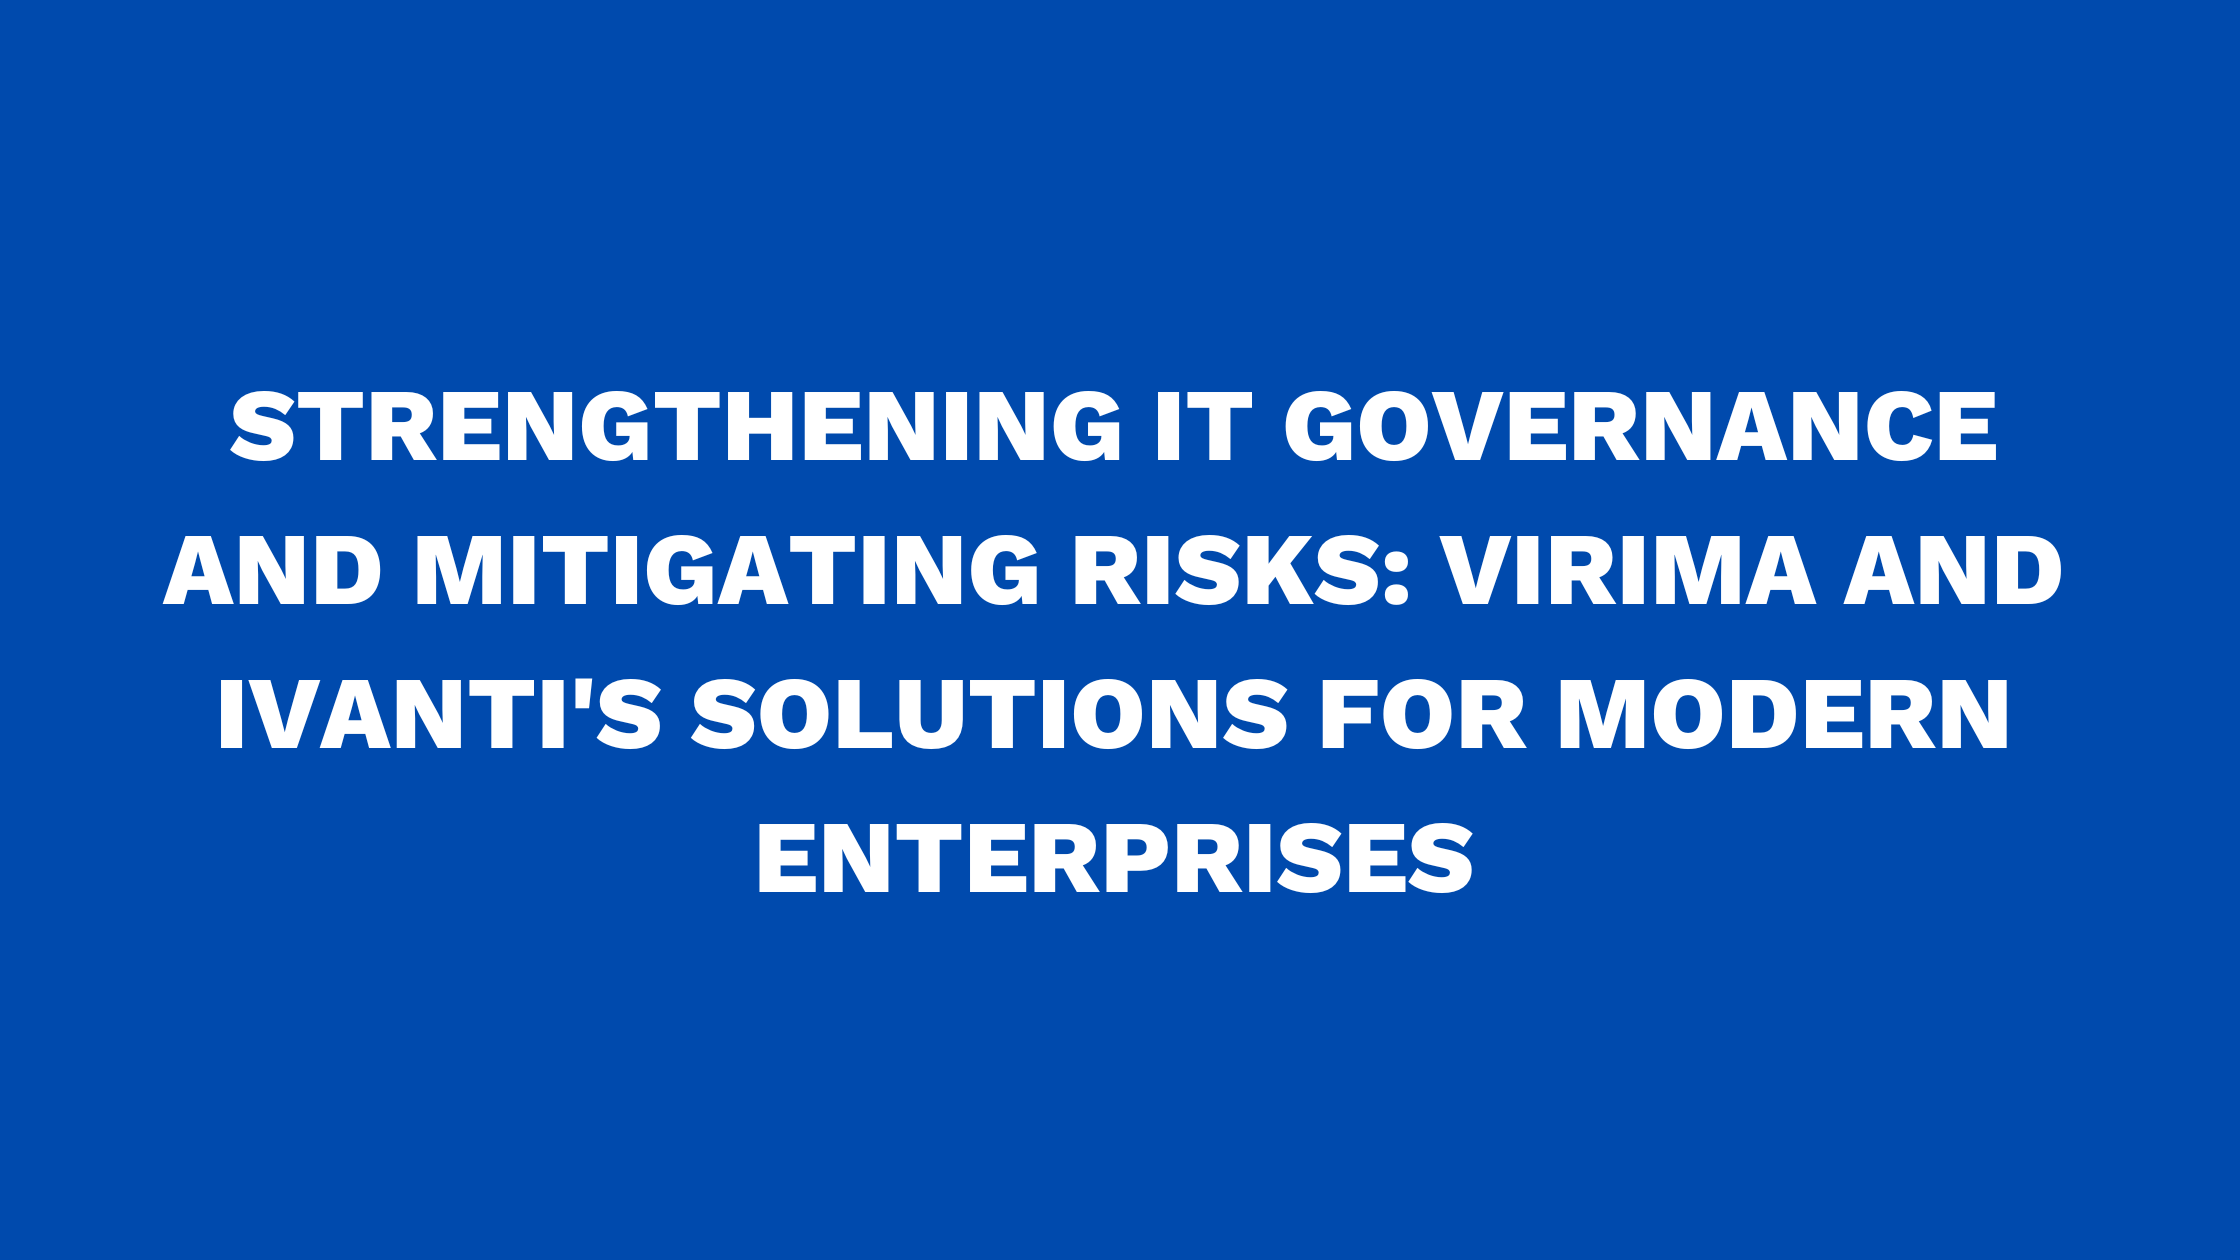 Strengthening IT governance and mitigating risks: Virima and Ivanti's solutions for modern enterprises